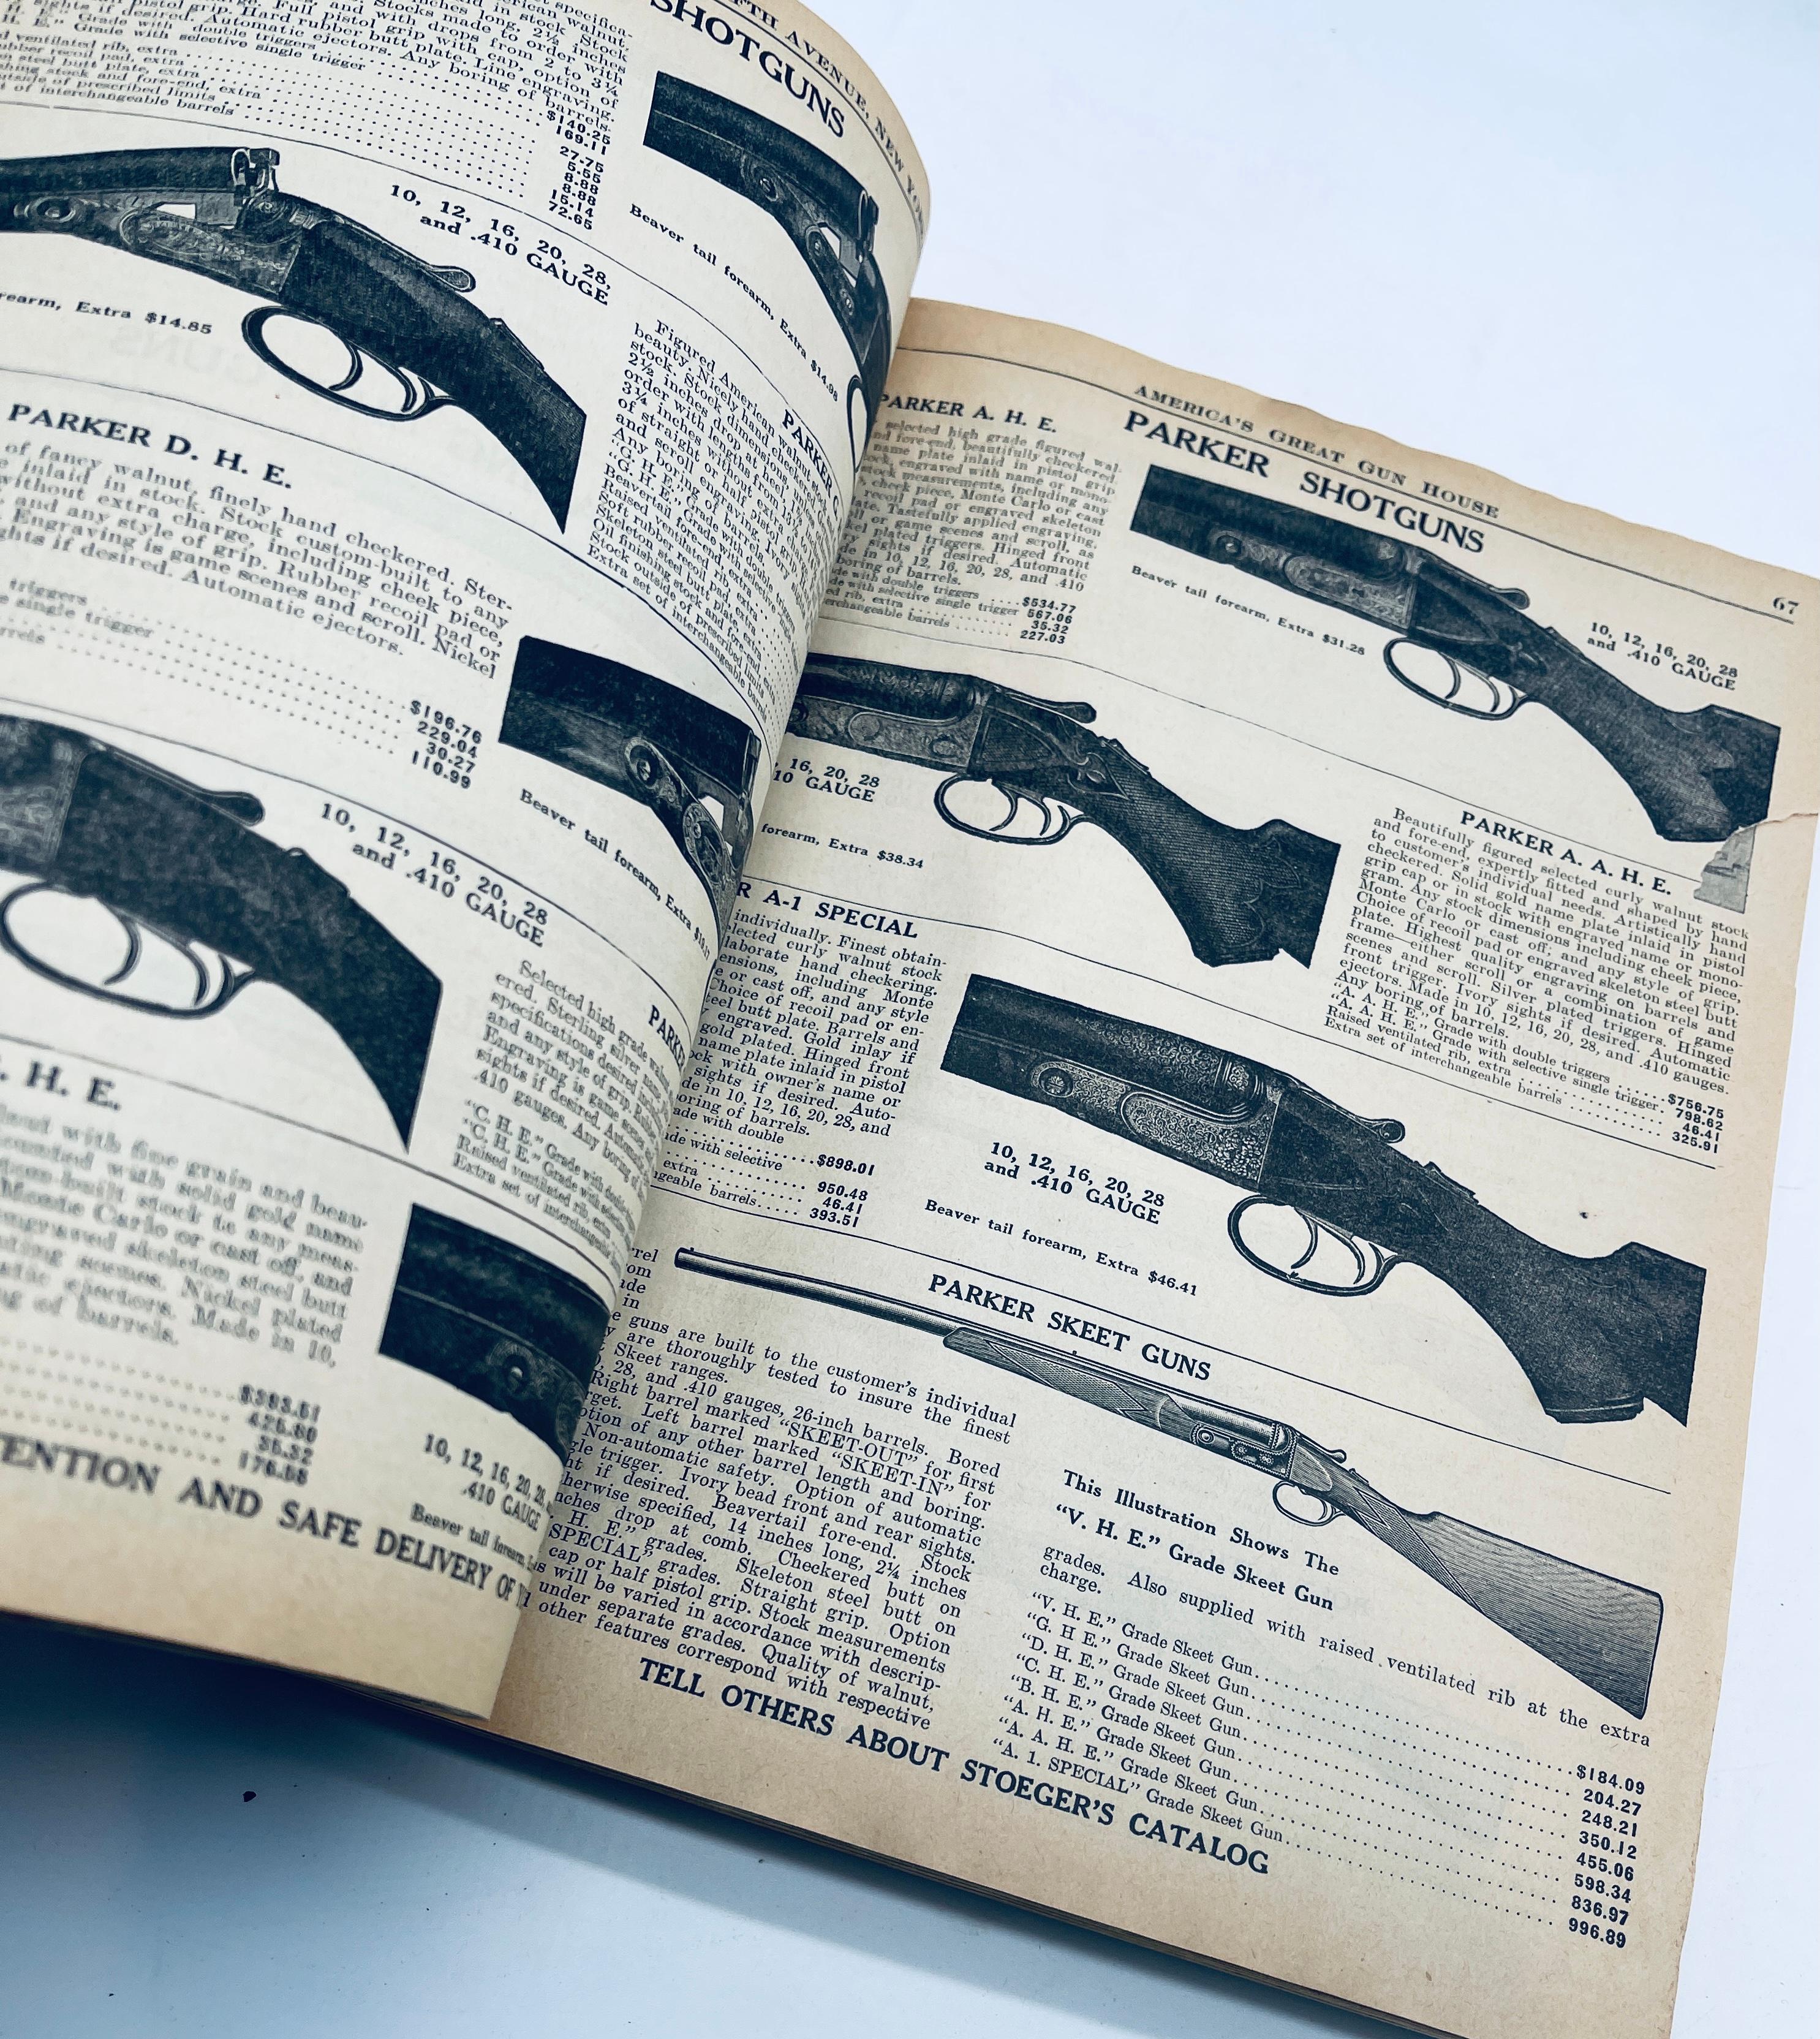 1945 Stoeger CATALOG The Shooters Bible #36 Gun Book RIFLES GUN AMMO